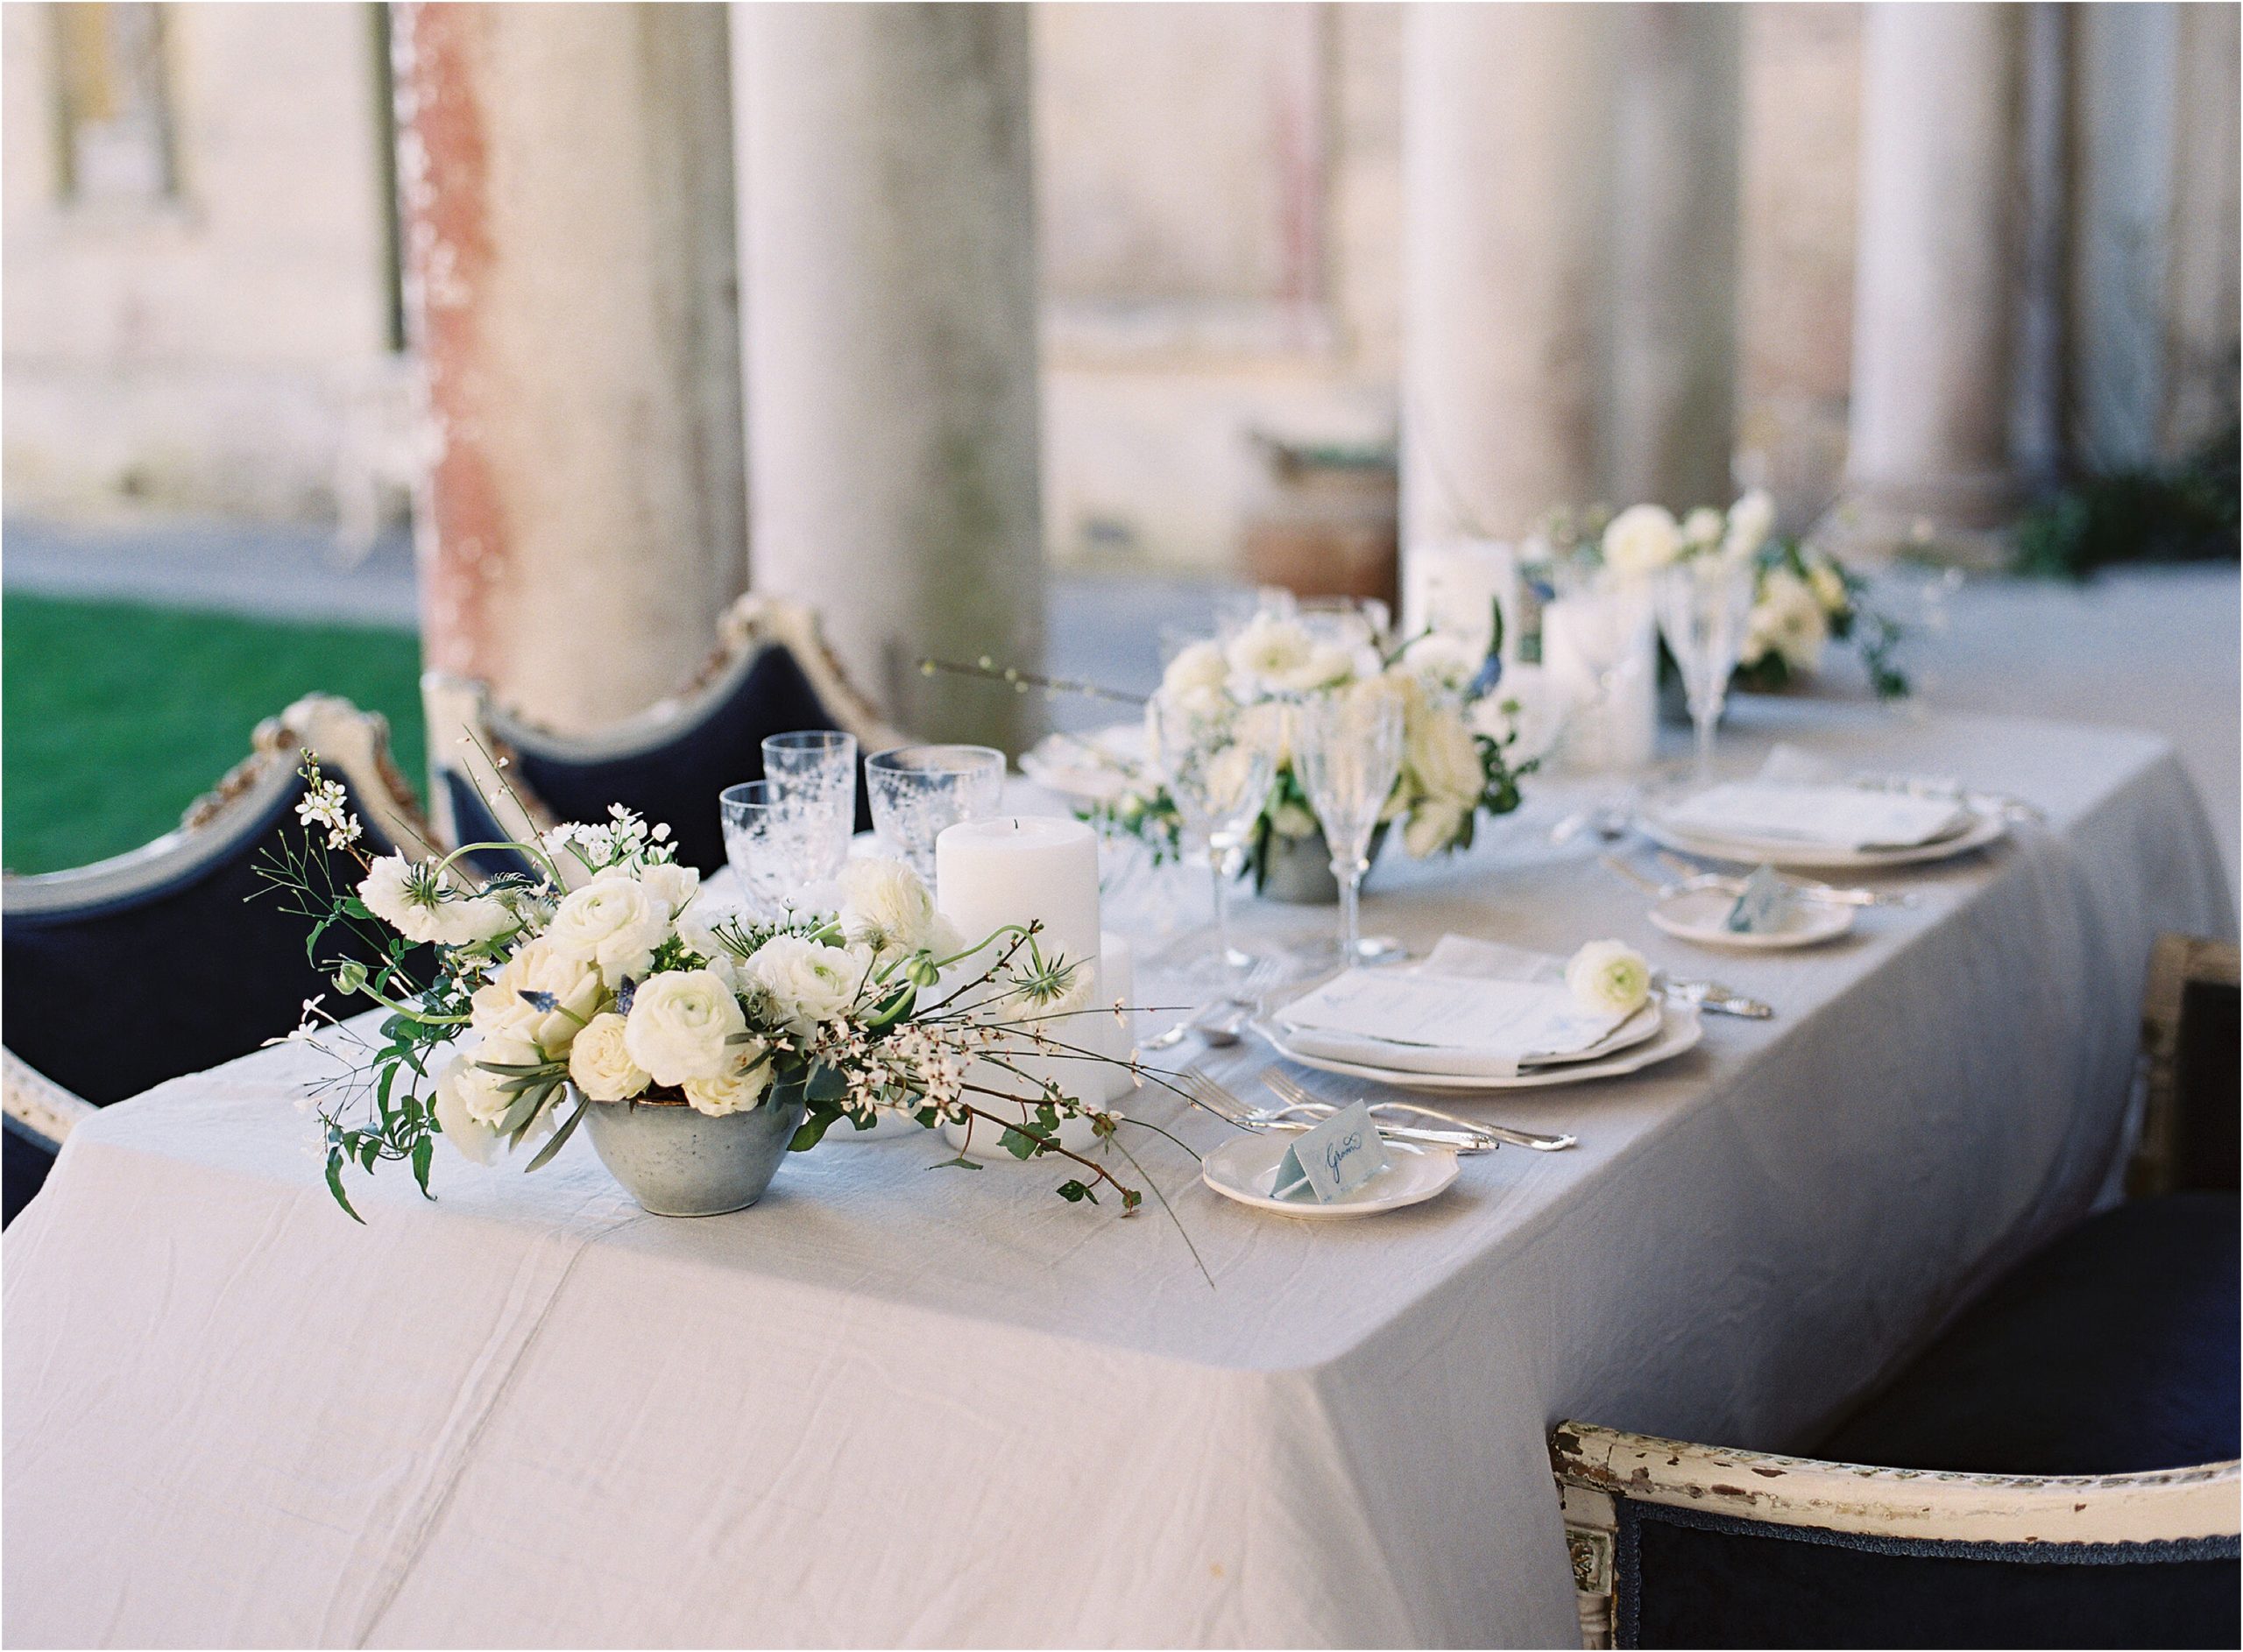 Wedding table set up for intimate wedding